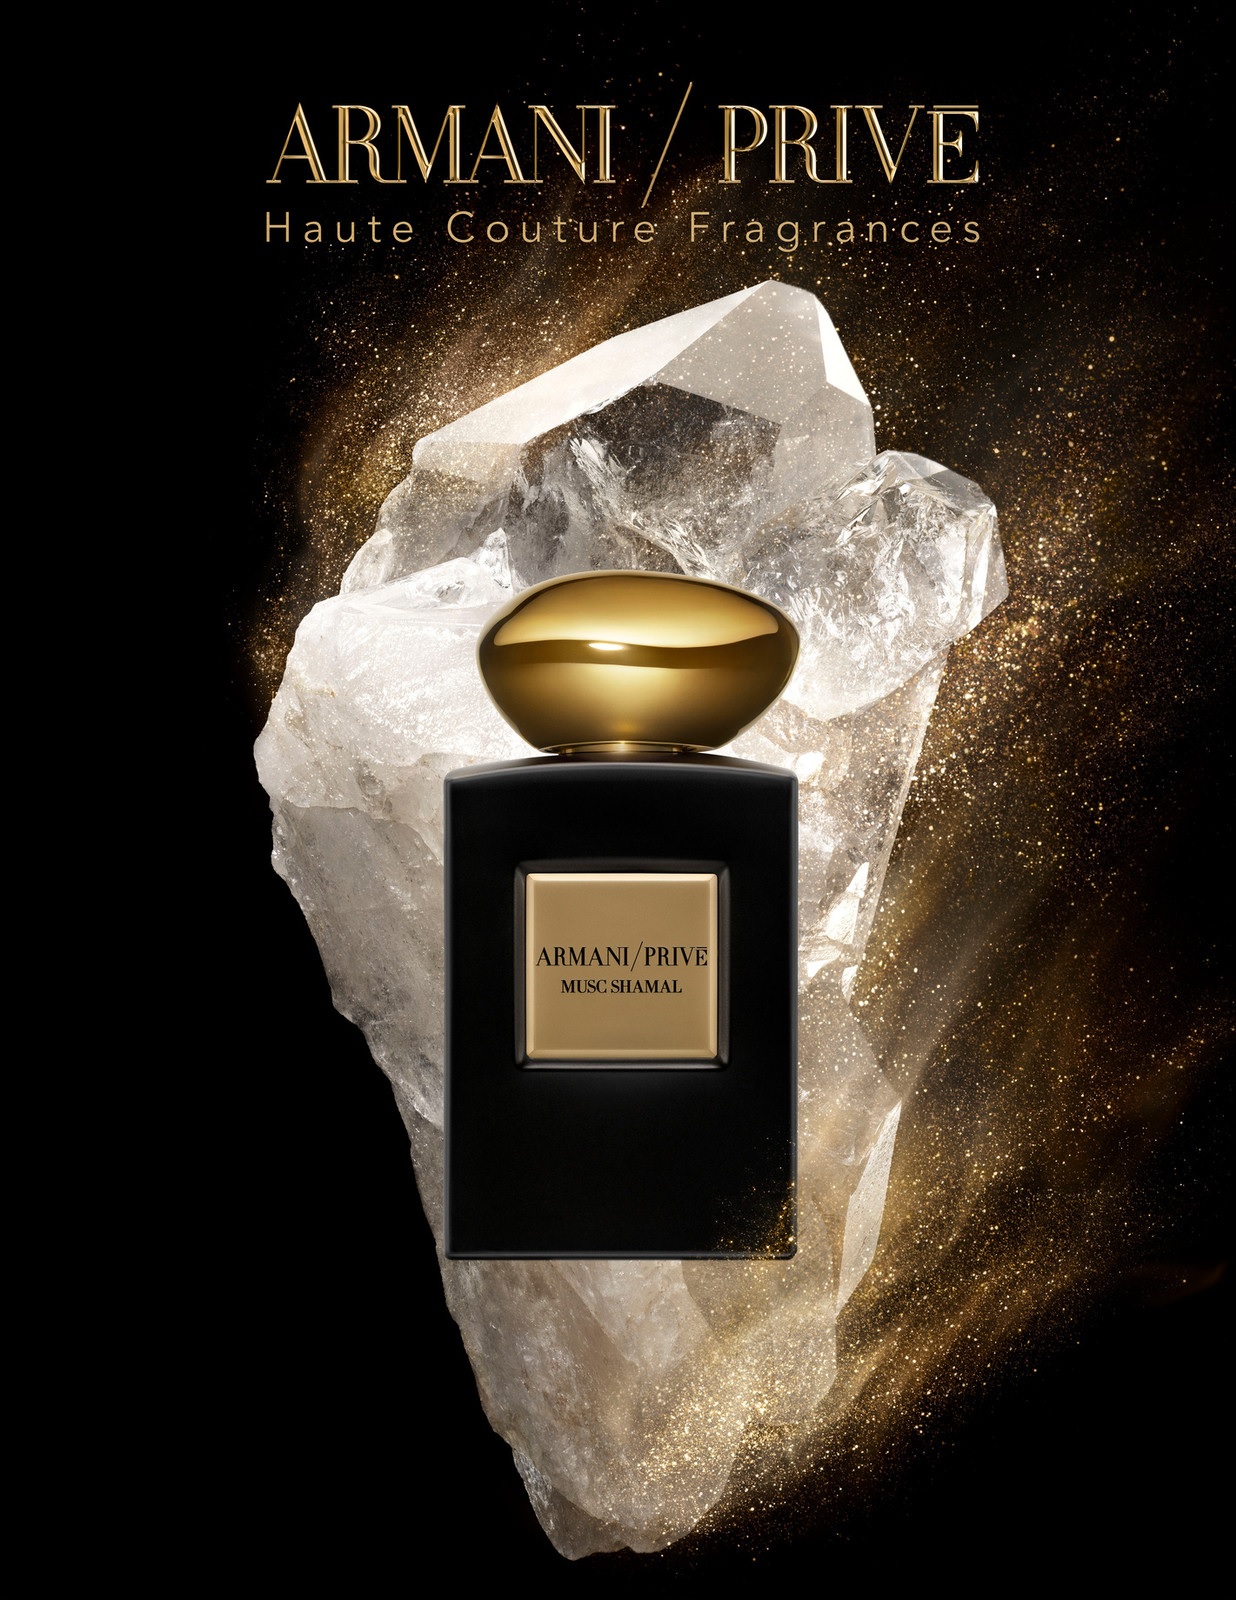 Musc Shamal Giorgio Armani parfum - een 